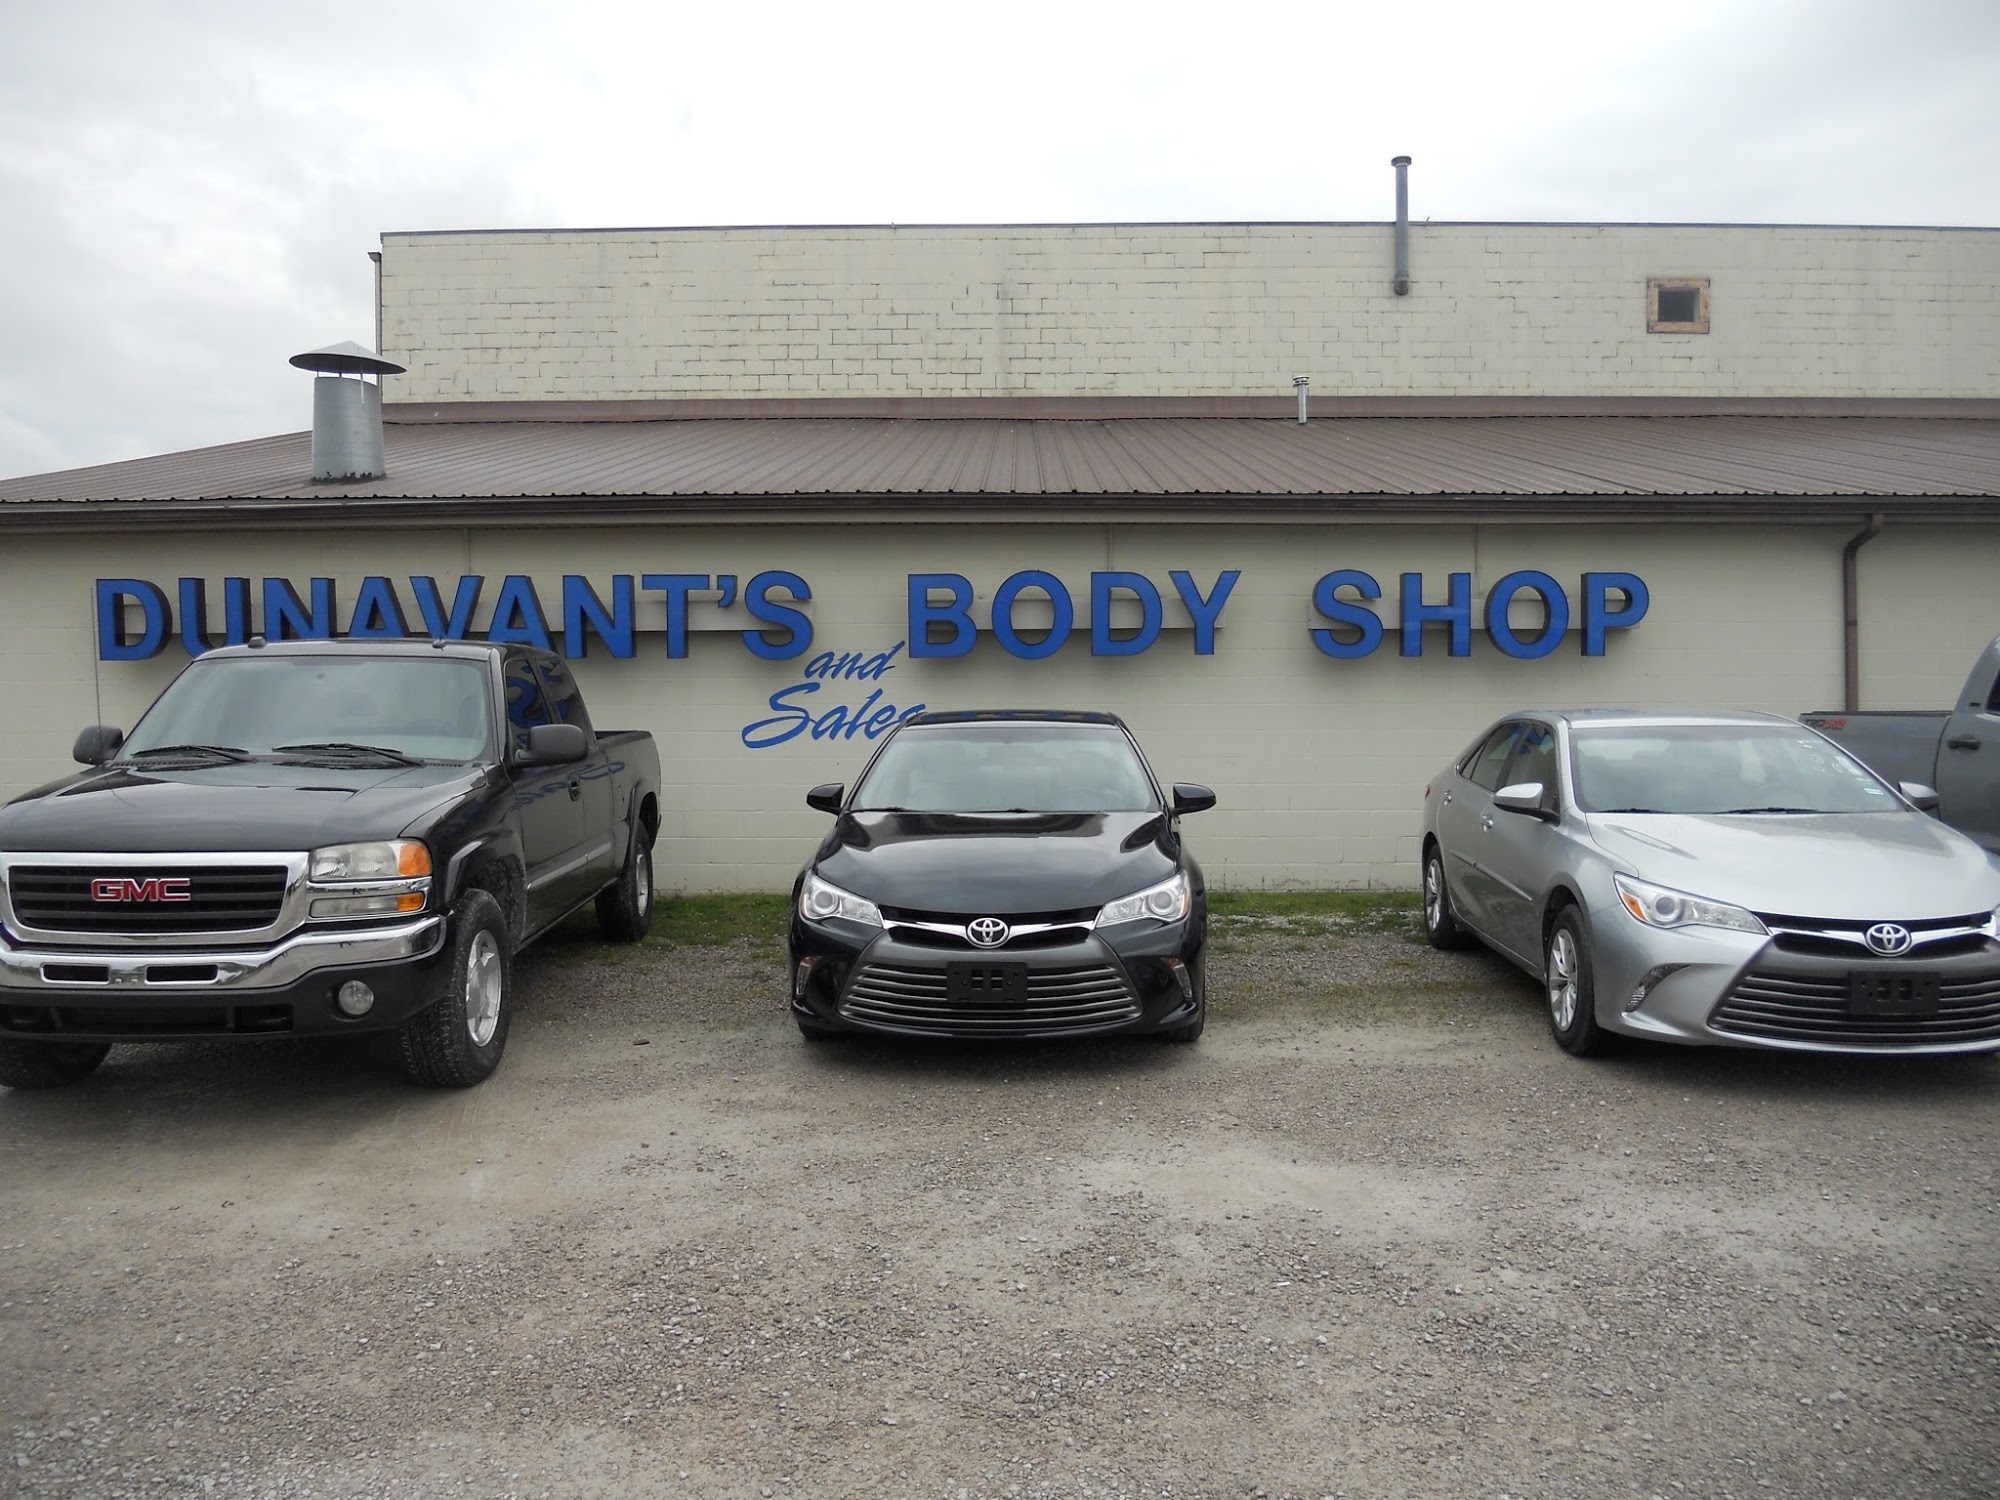 Dunavant's Body Shop and Sales